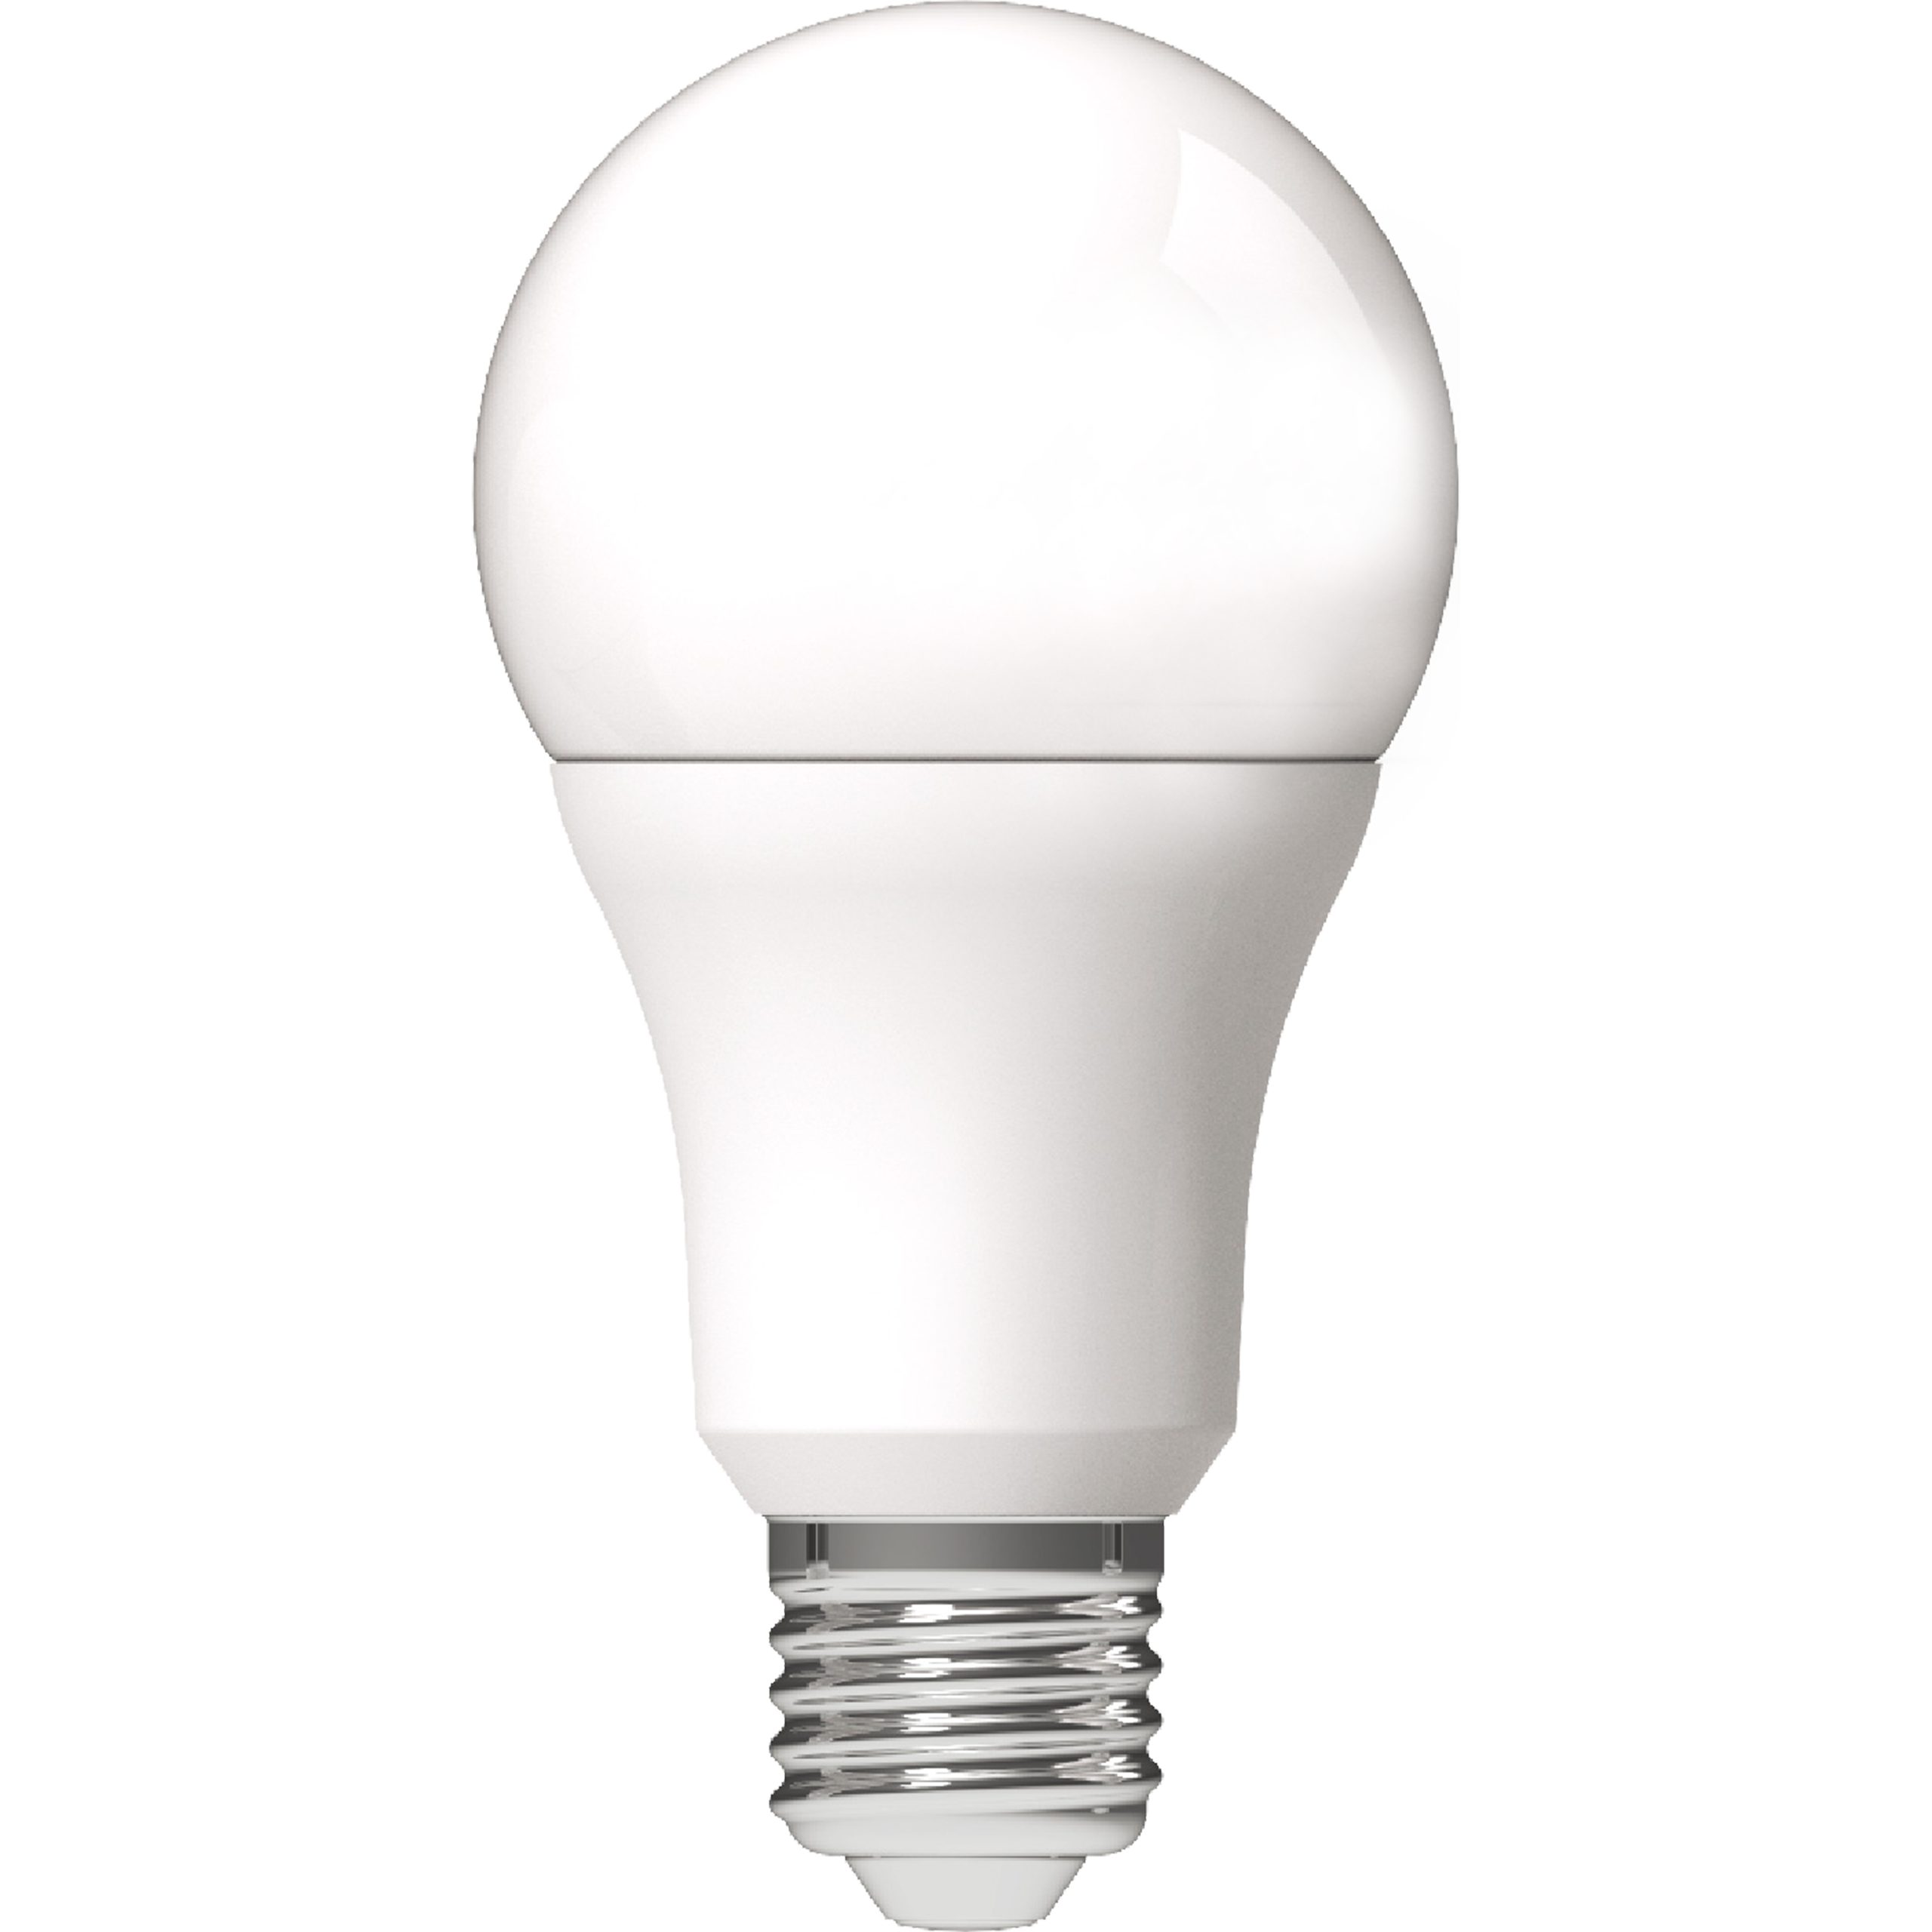 LED's light LED-Leuchtmittel 0620160 LED Birne, E27, E27 4,9W warmweiß Opal A60 - 50.000h Haltbarkeit